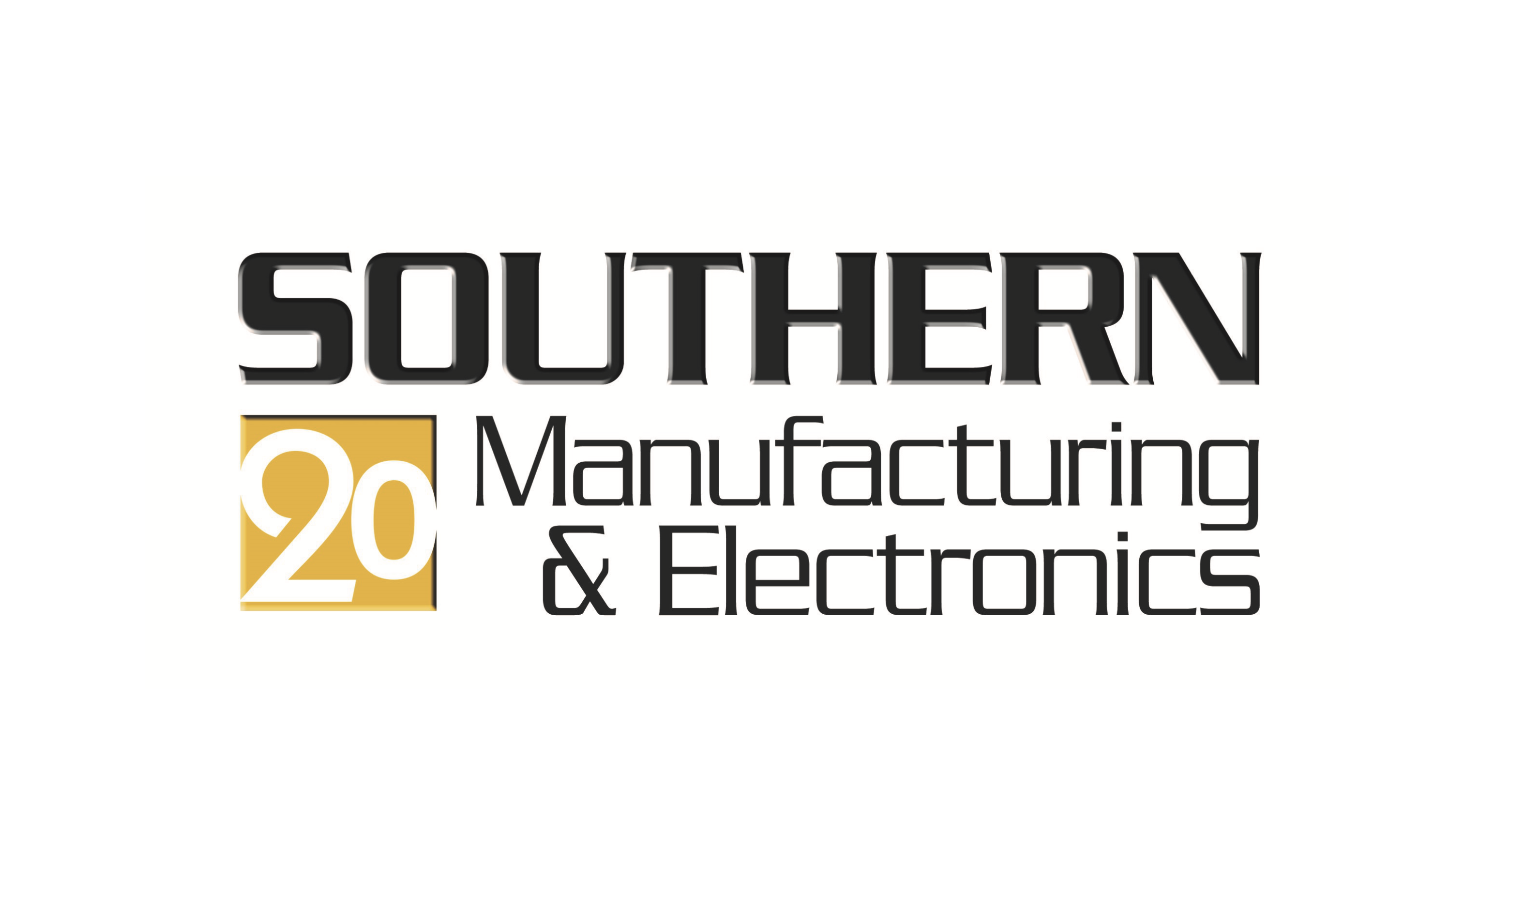 Southern Manufacturing Electronics 2020 Logo